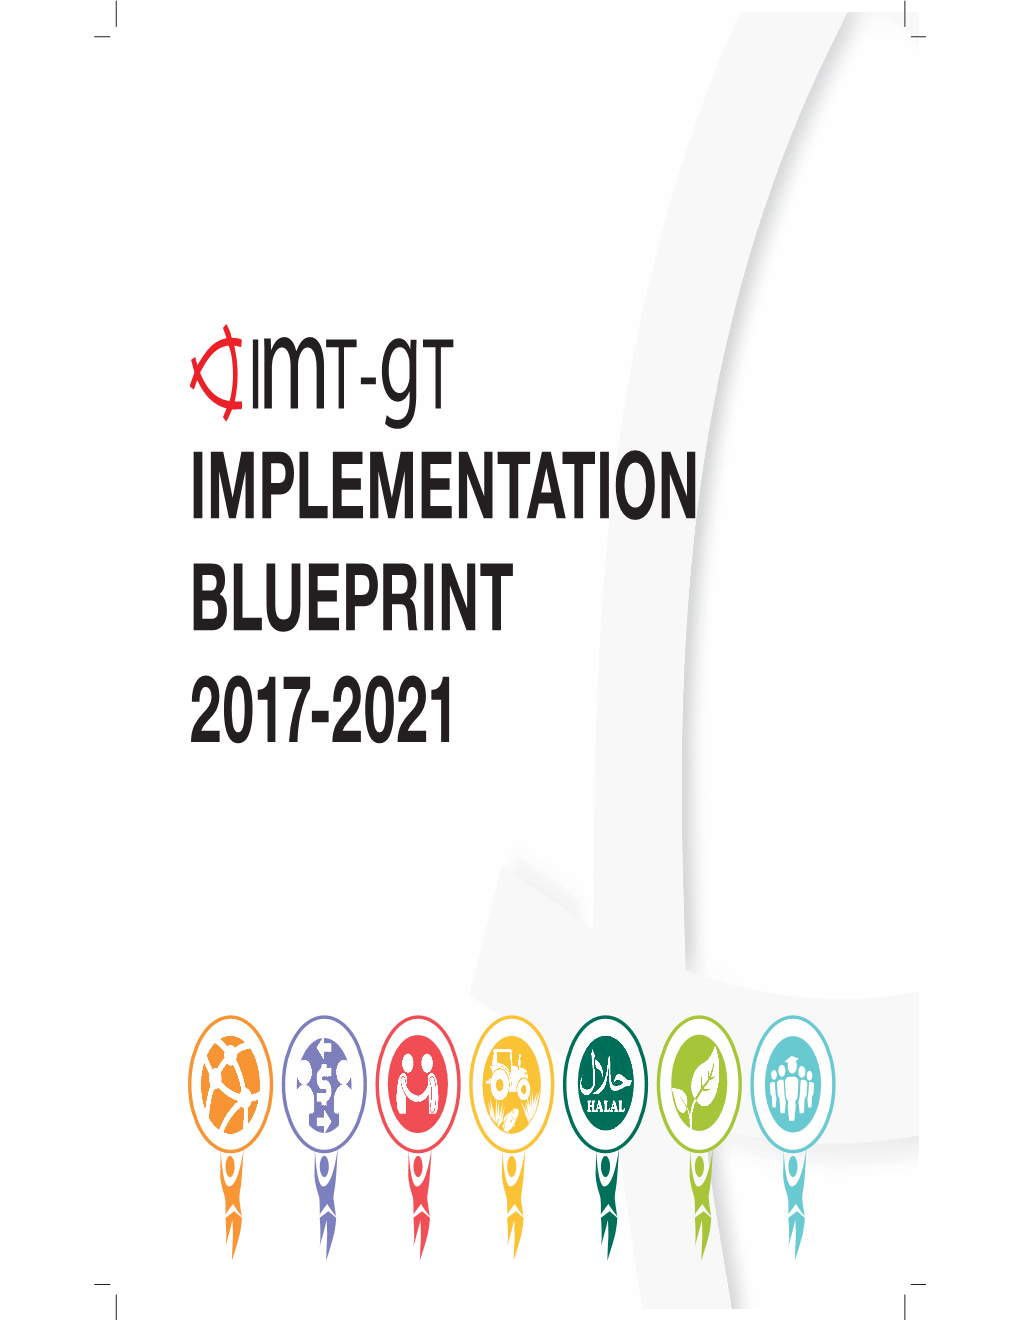 IMPLEMENTATION BLUEPRINT 2017-2021 Ii IMT-GT IMPLEMENTATION BLUEPRINT 2017-2021 Iv IMT-GT Implementation Blueprint 2017-2021 V